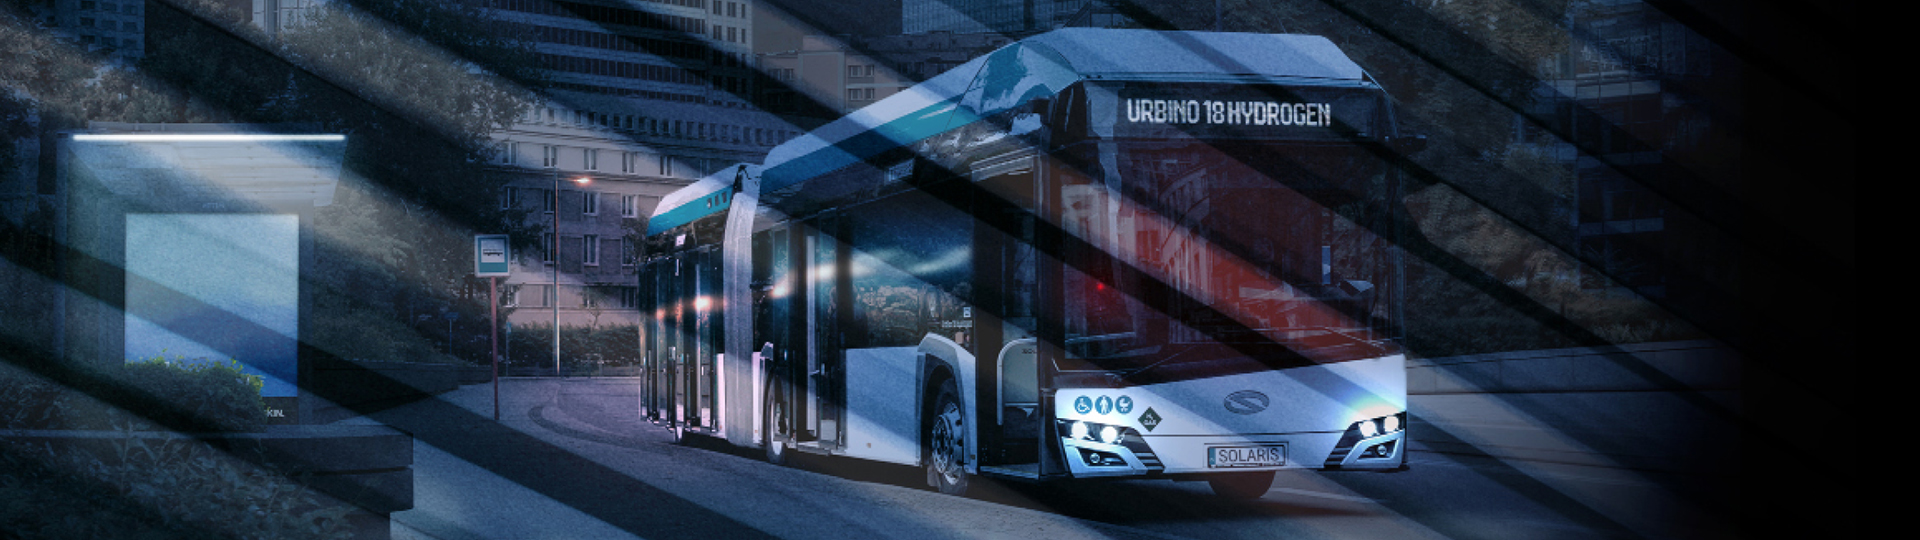 It's already tomorrow! The Global Launch of Solaris Urbino 18 hydrogen  #SolarisTalks conference